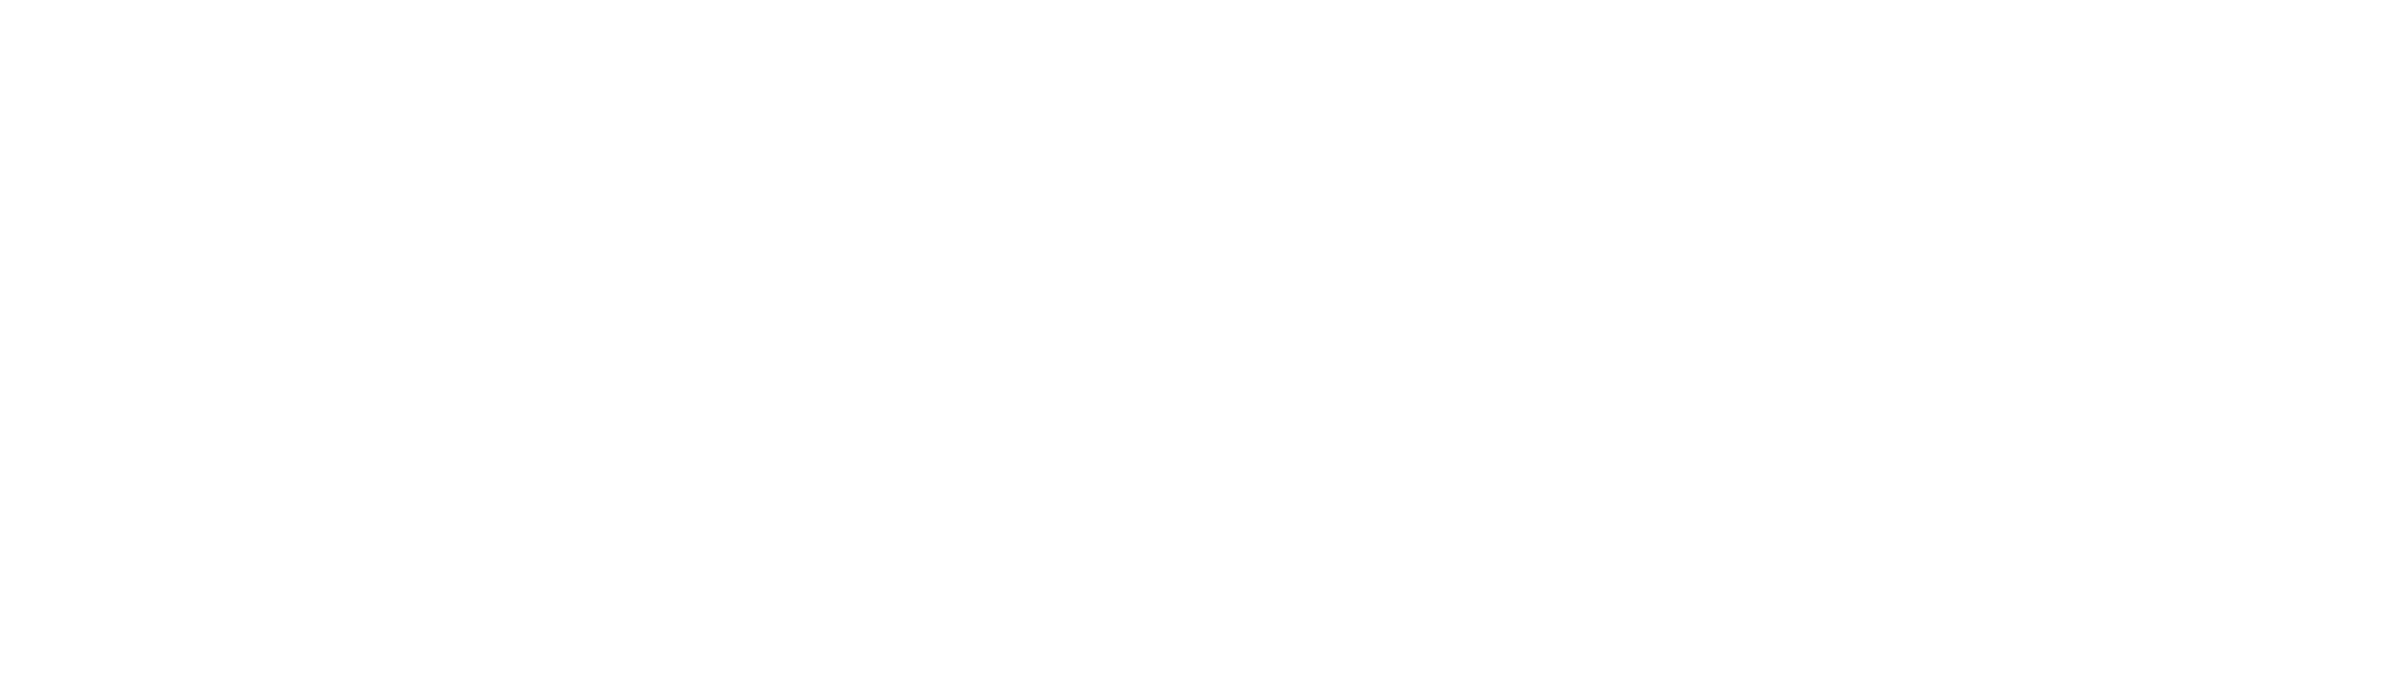 Yik Yak Logo - Yik Yak Logo PNG Transparent & SVG Vector - Freebie Supply